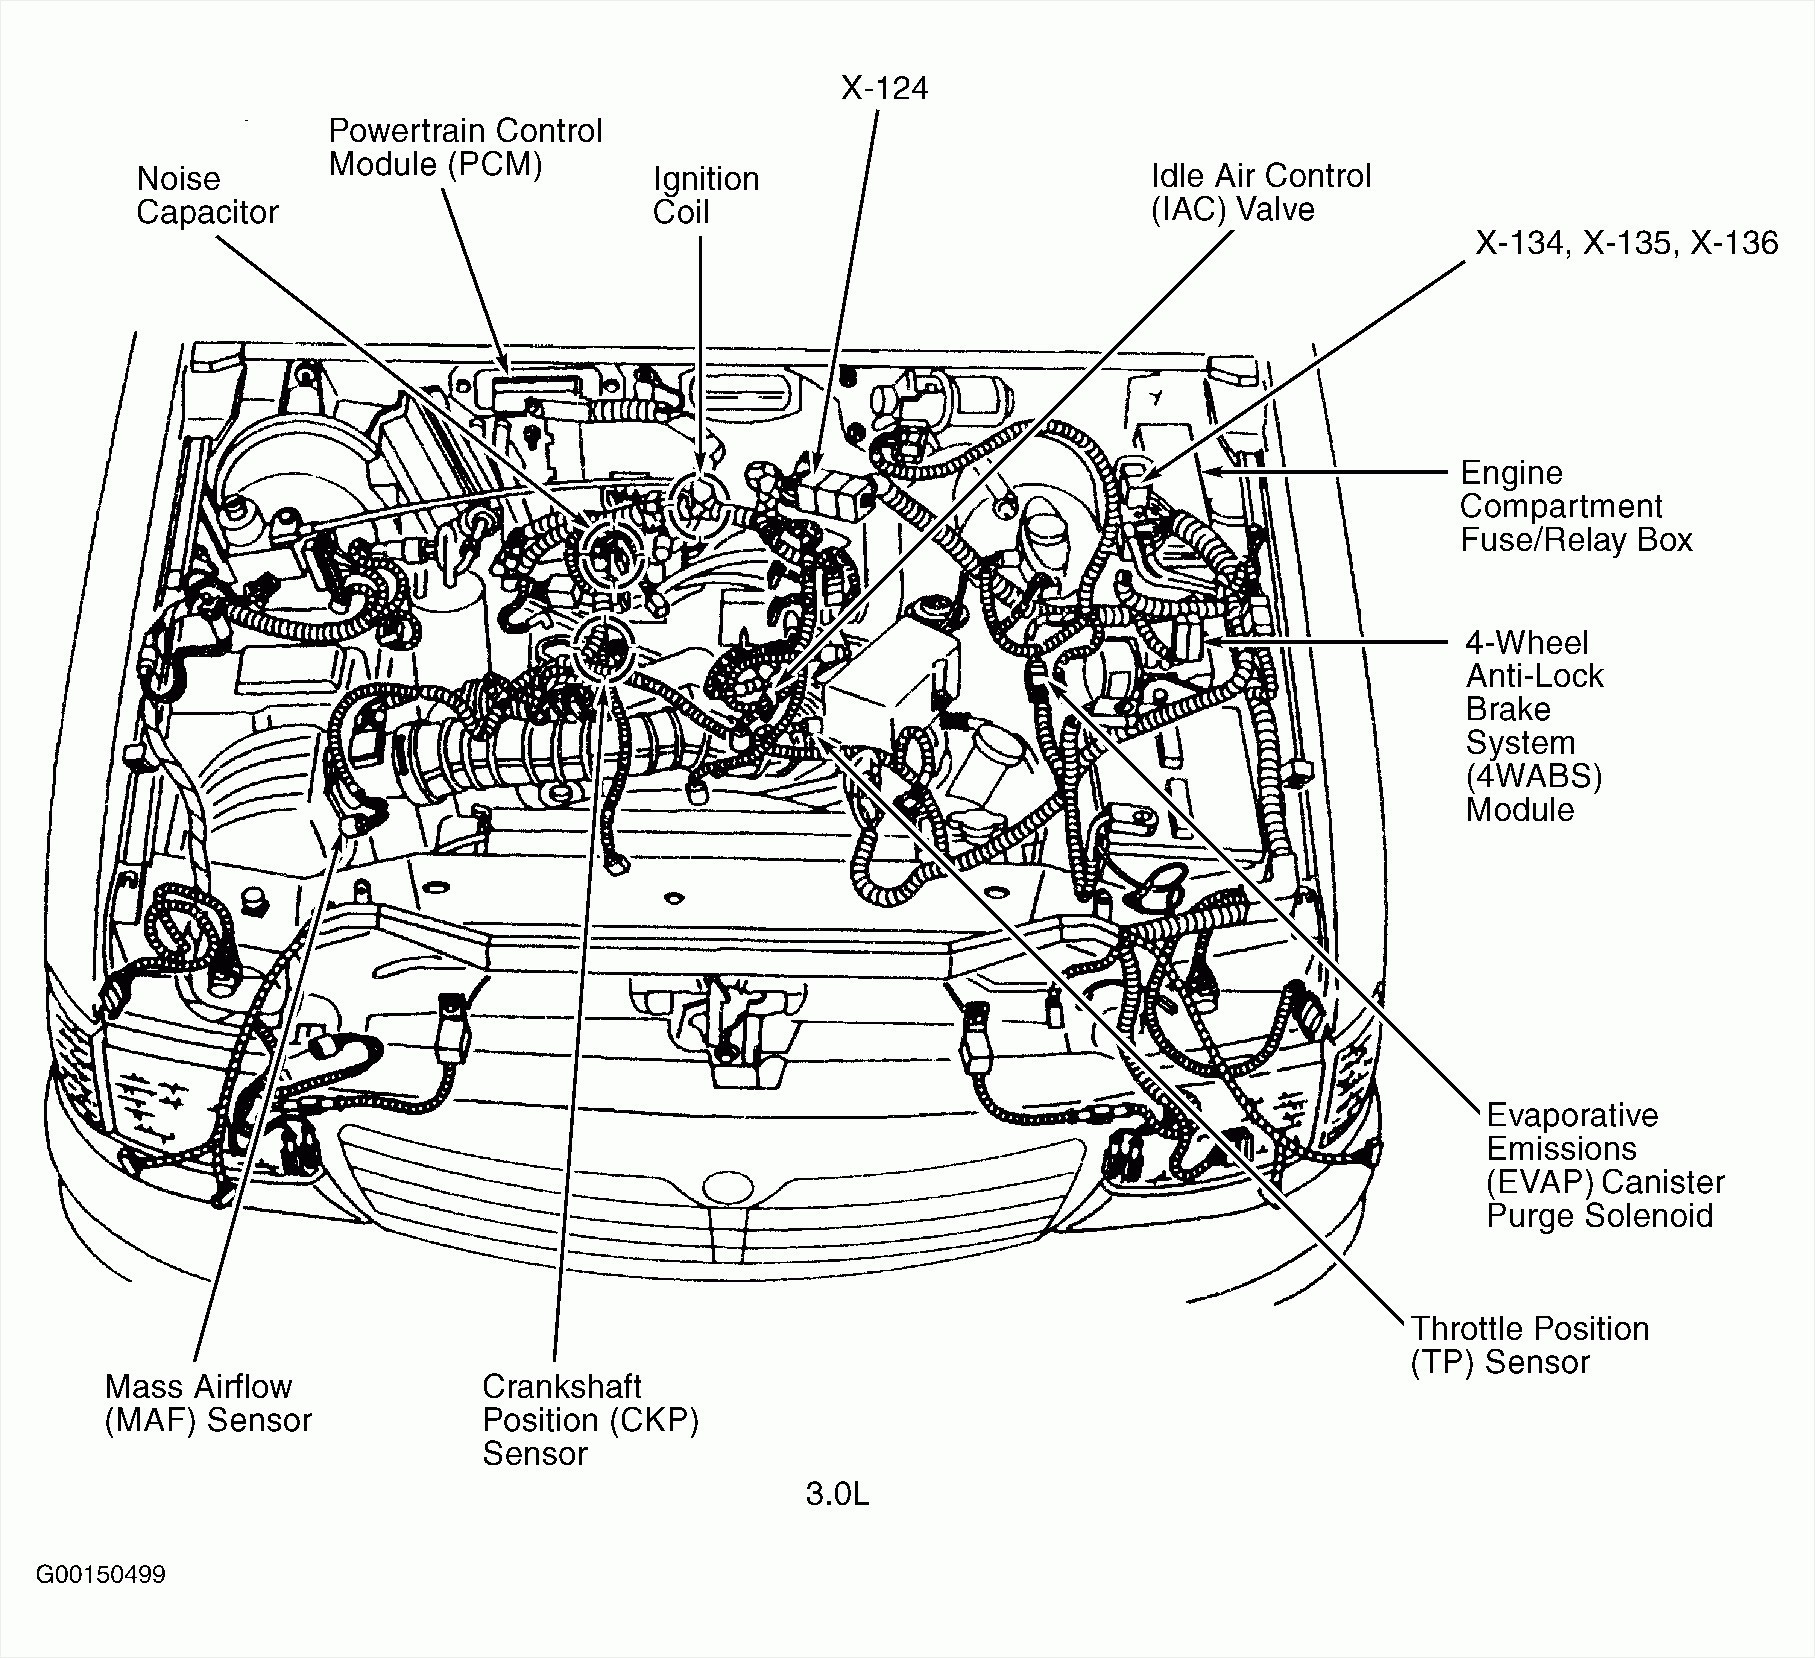 2001 Honda Accord V6 Engine Diagram Nissan 3 0 Engine Diagram Wiring Diagram Mega Of 2001 Honda Accord V6 Engine Diagram